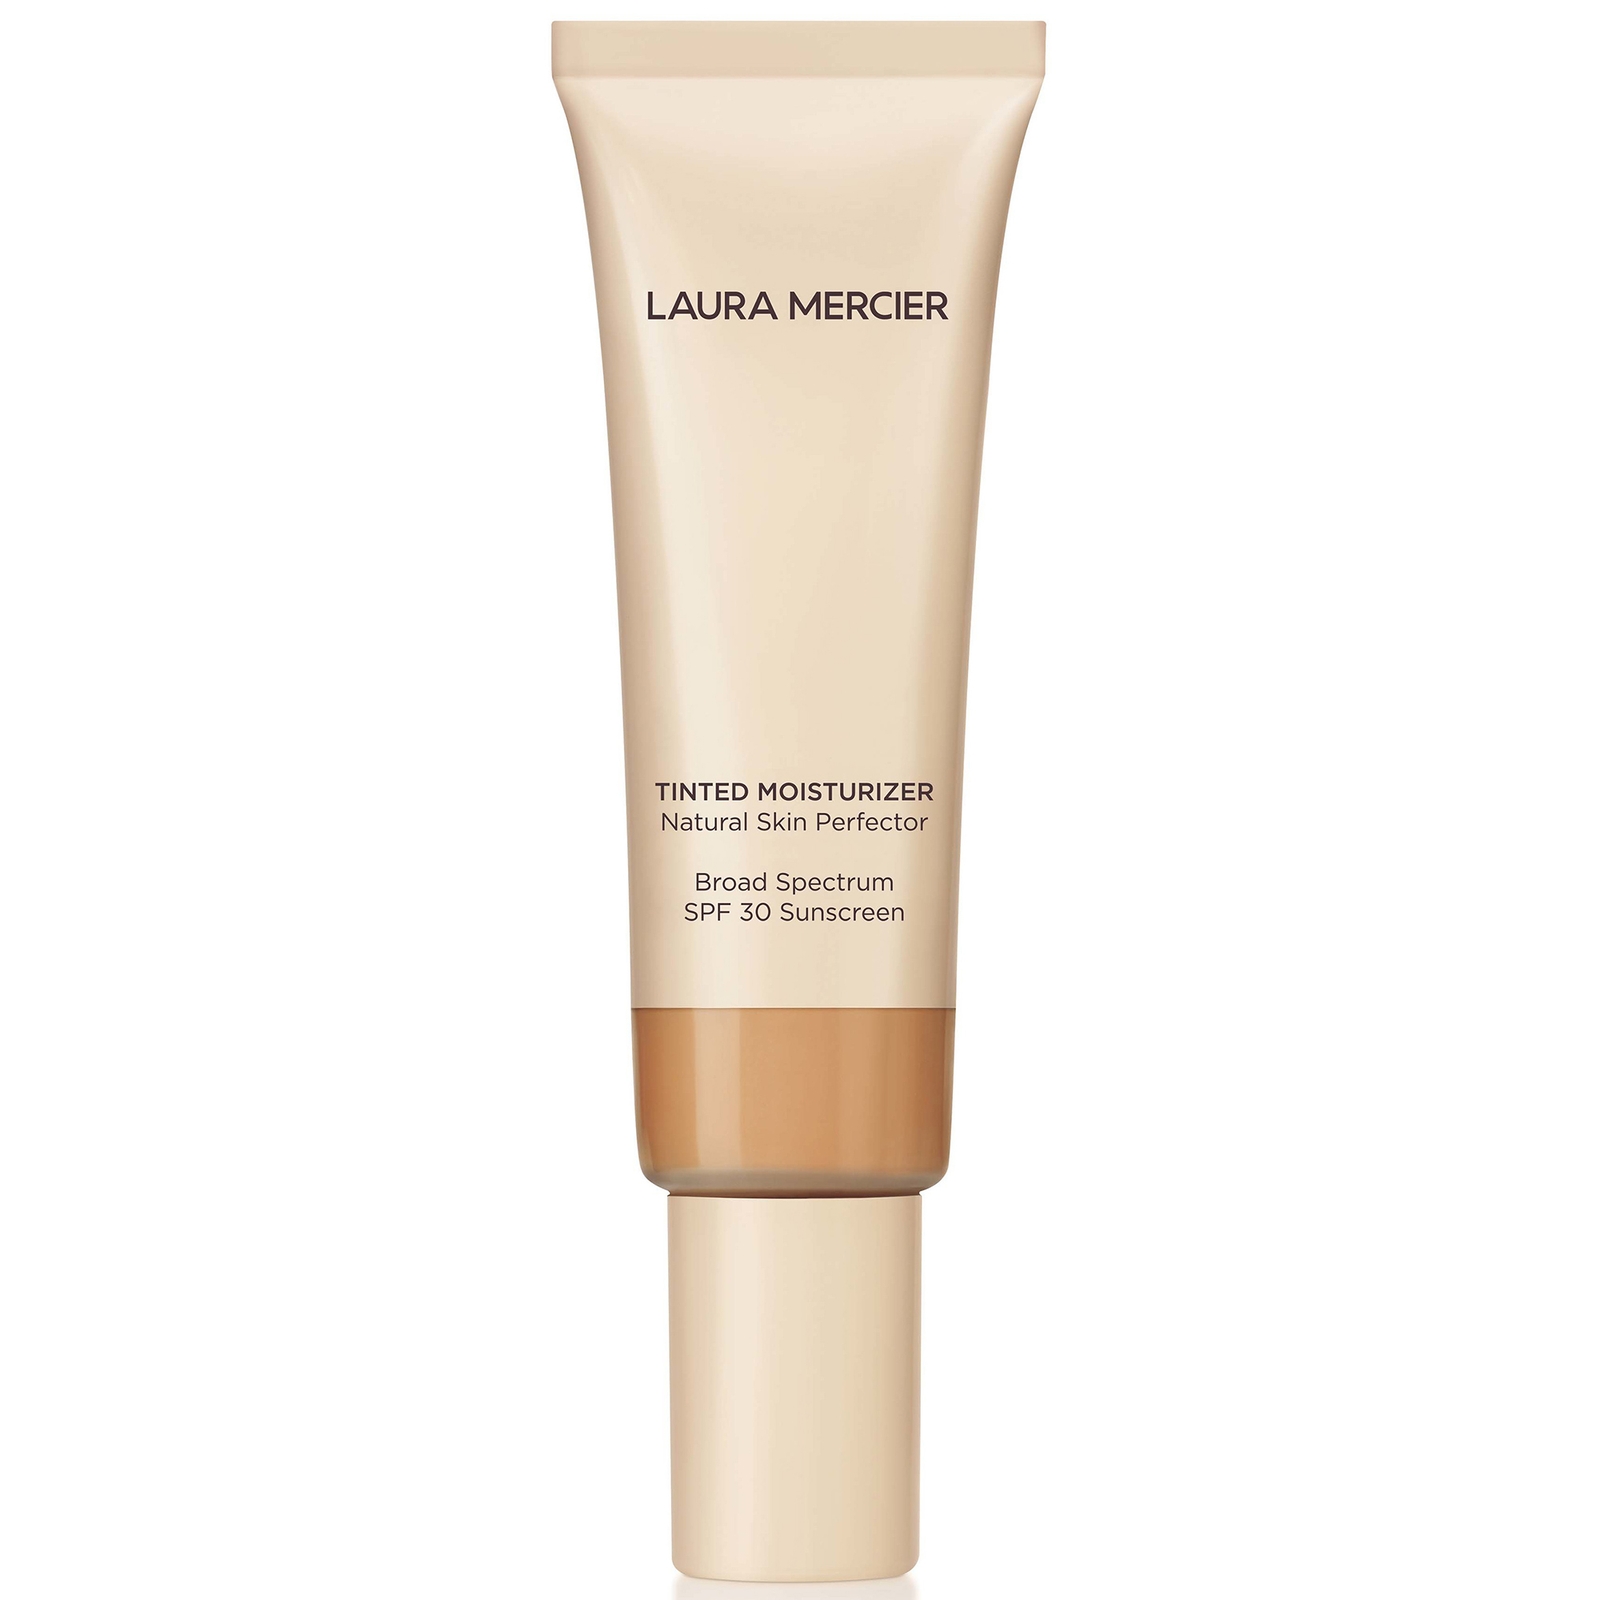 Laura Mercier Tinted Moisturiser Natural Skin Perfector 50ml (Various Shades) - 3N1 Sand